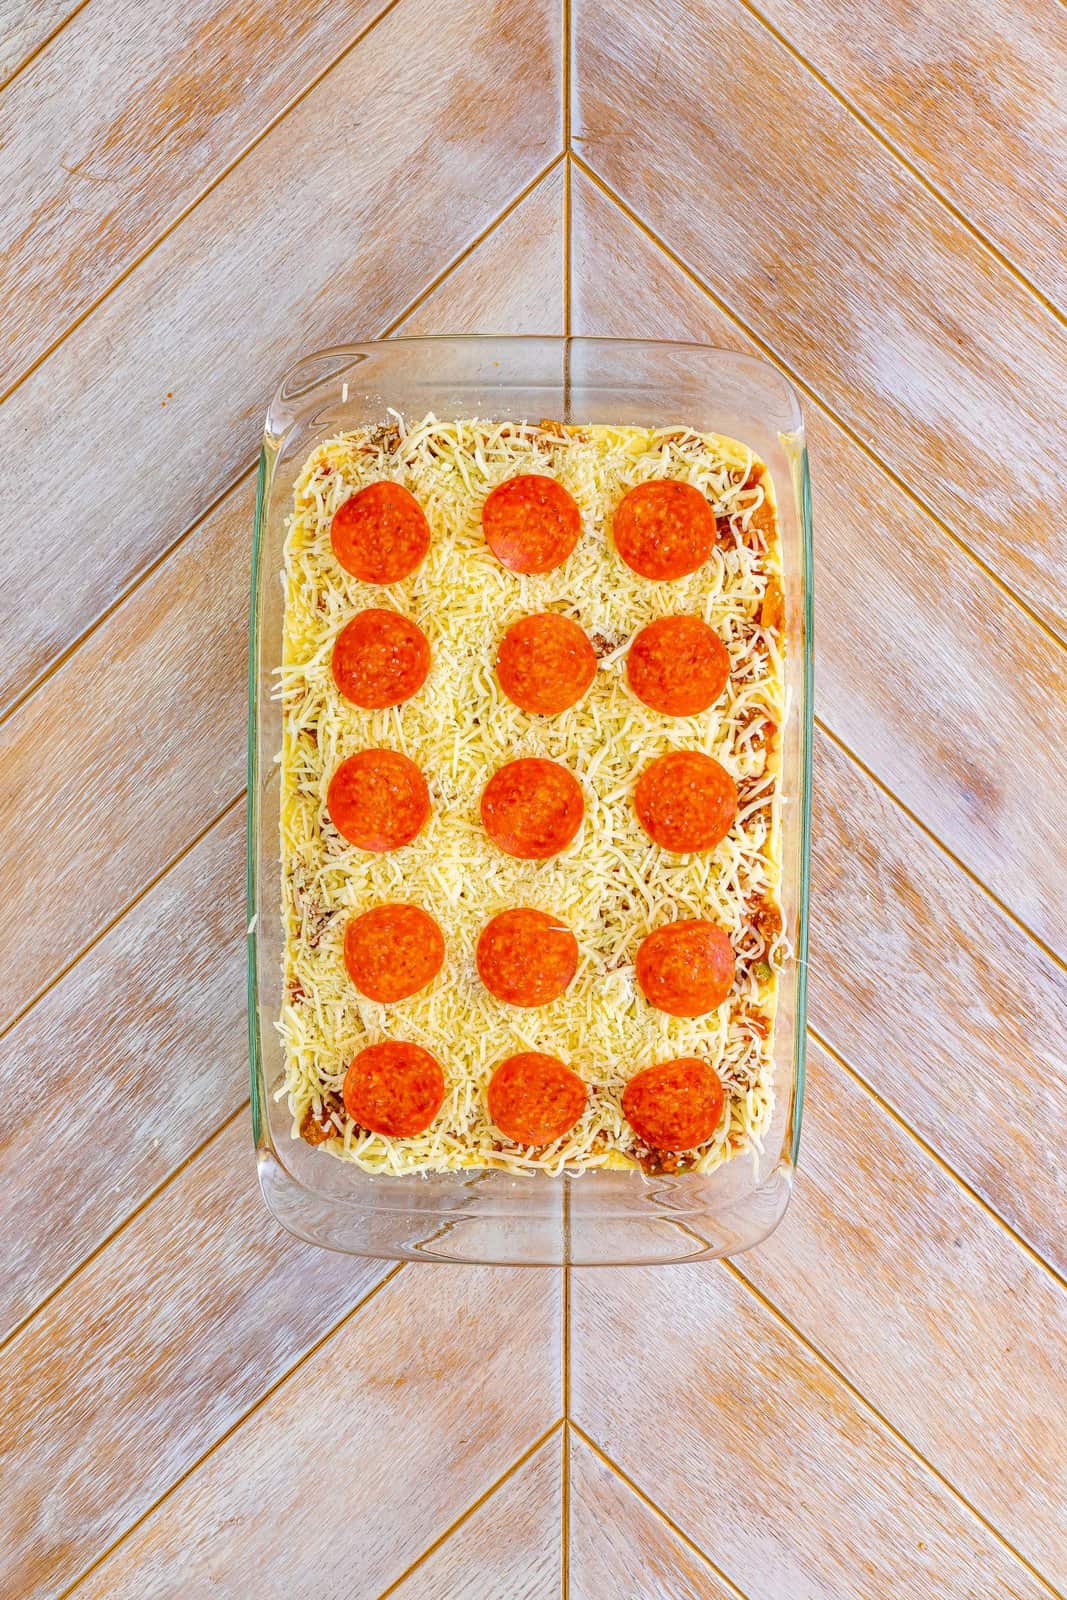 Uncooked puffy pizza casserole. 